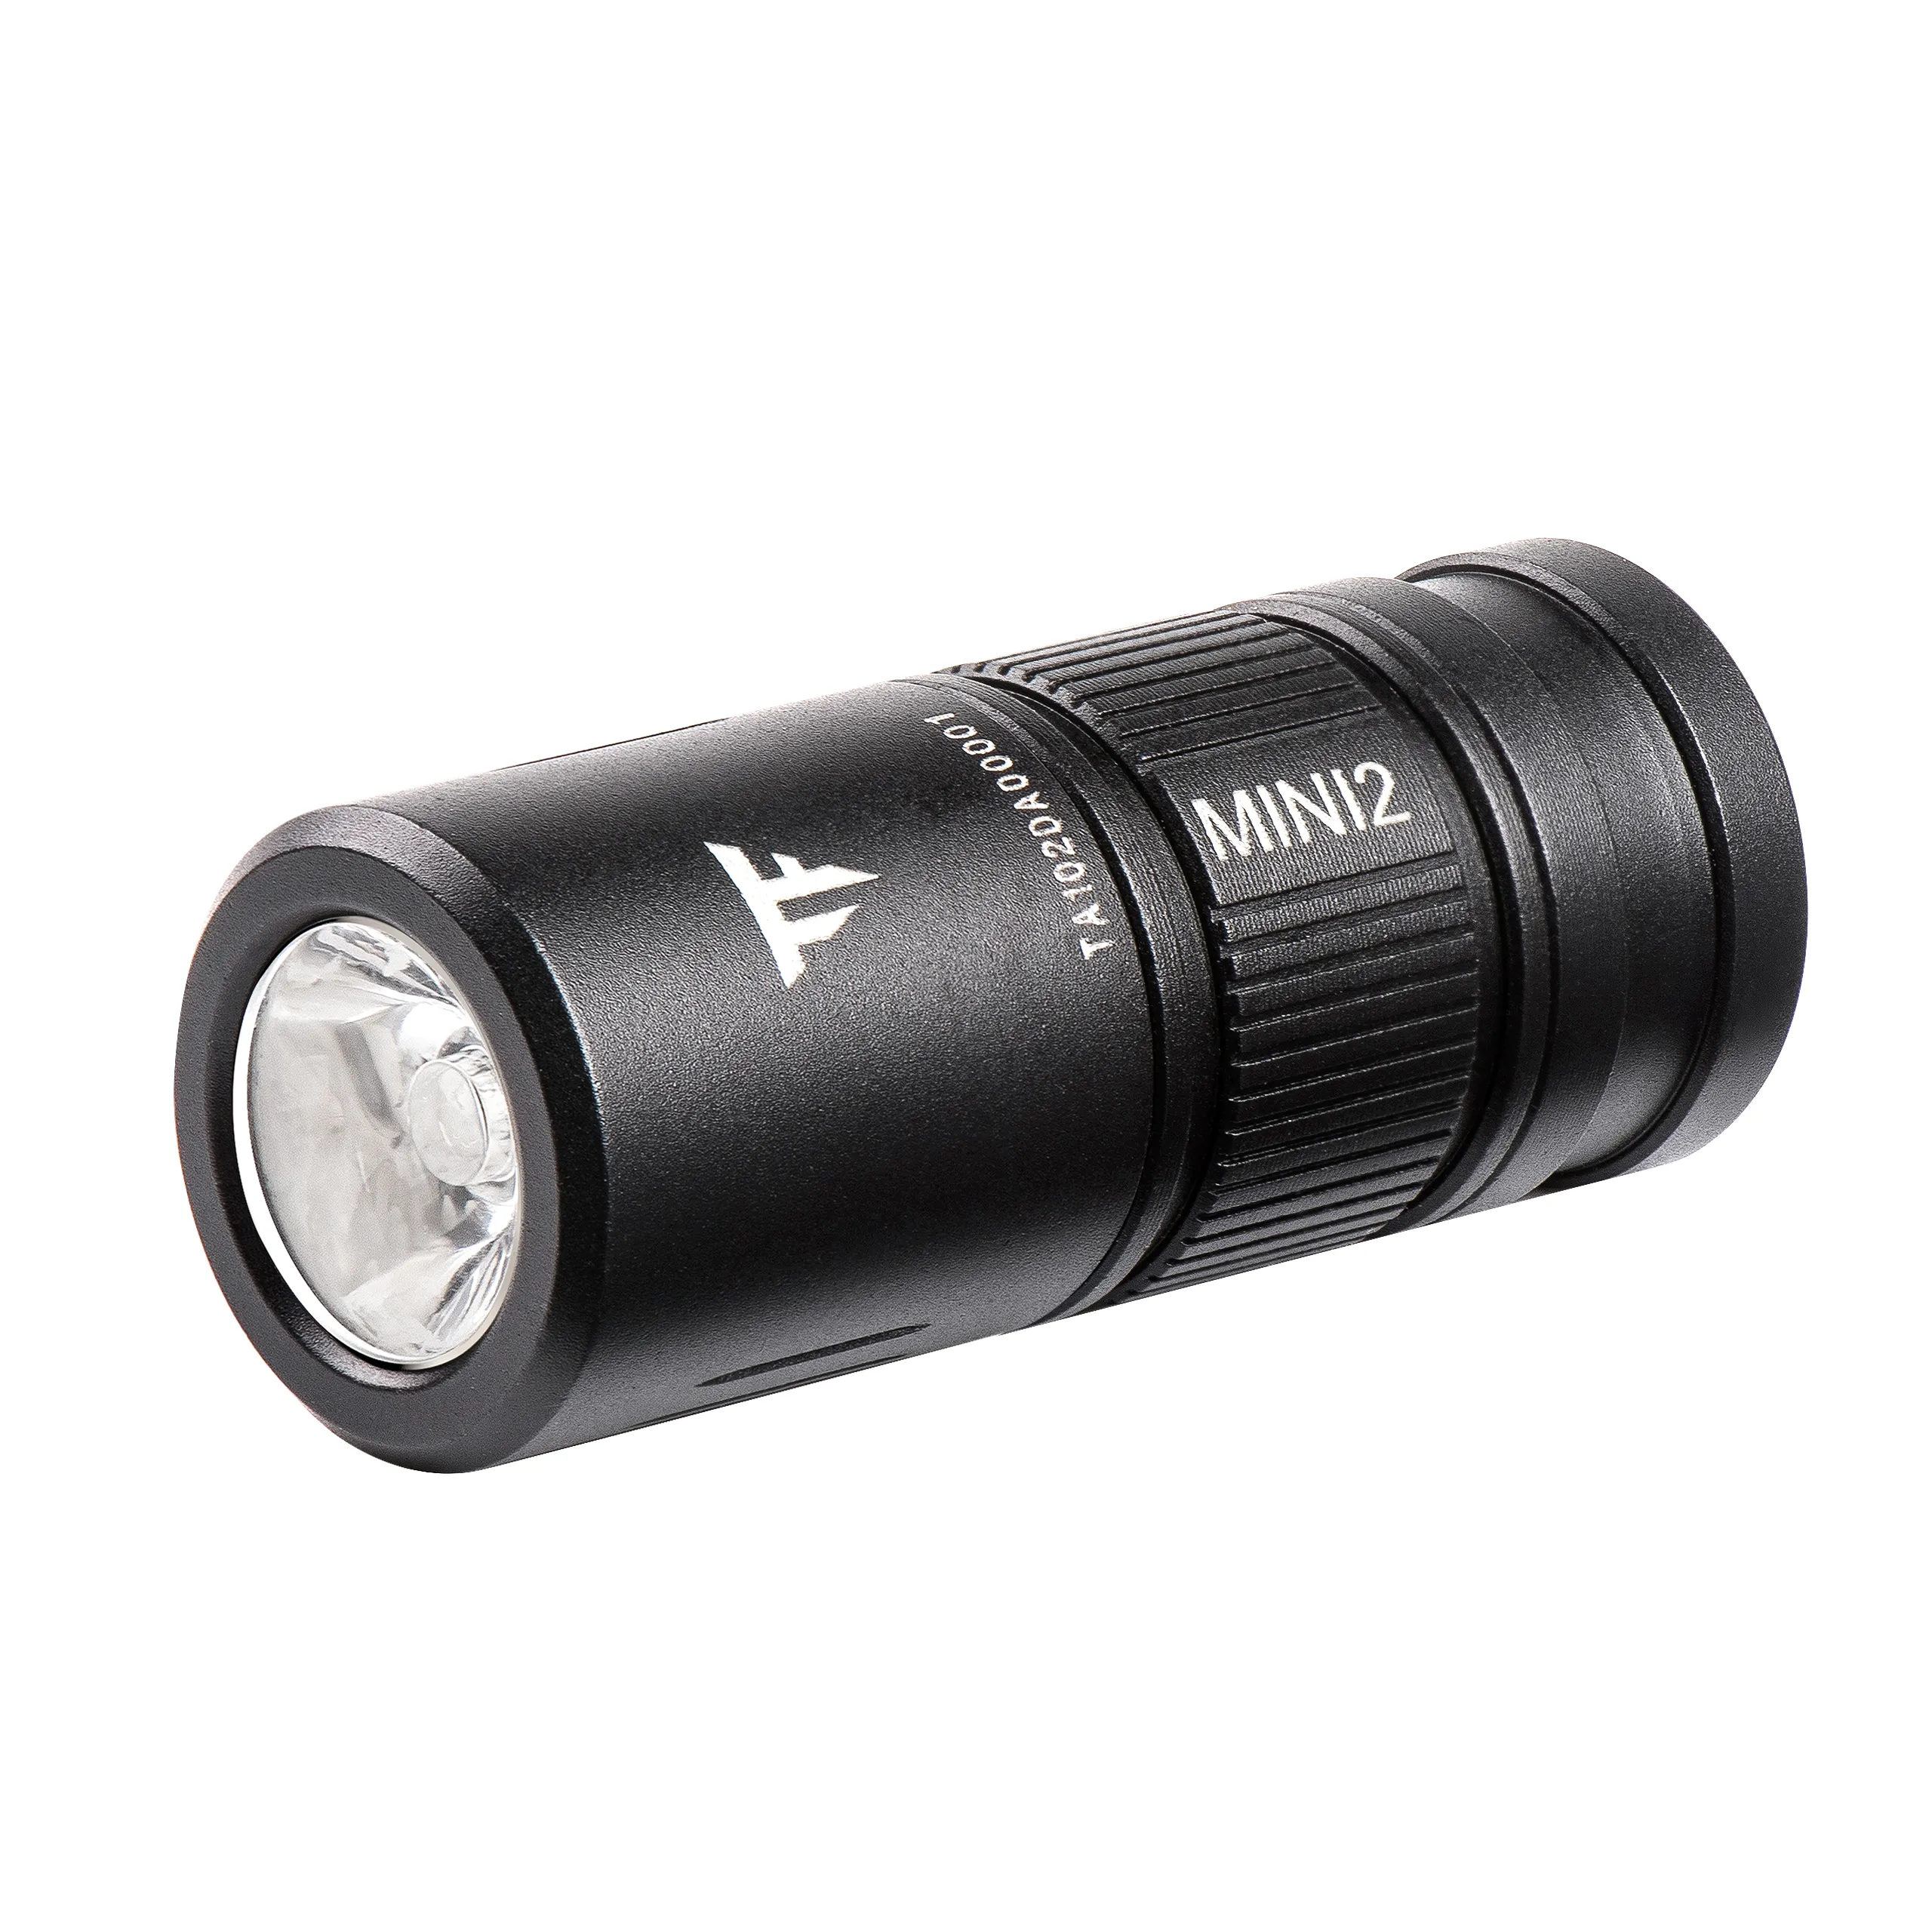 Torce impermeabili USB ricaricabile Fleshlight Pocket Mini LED torcia portachiavi torcia di emergenza